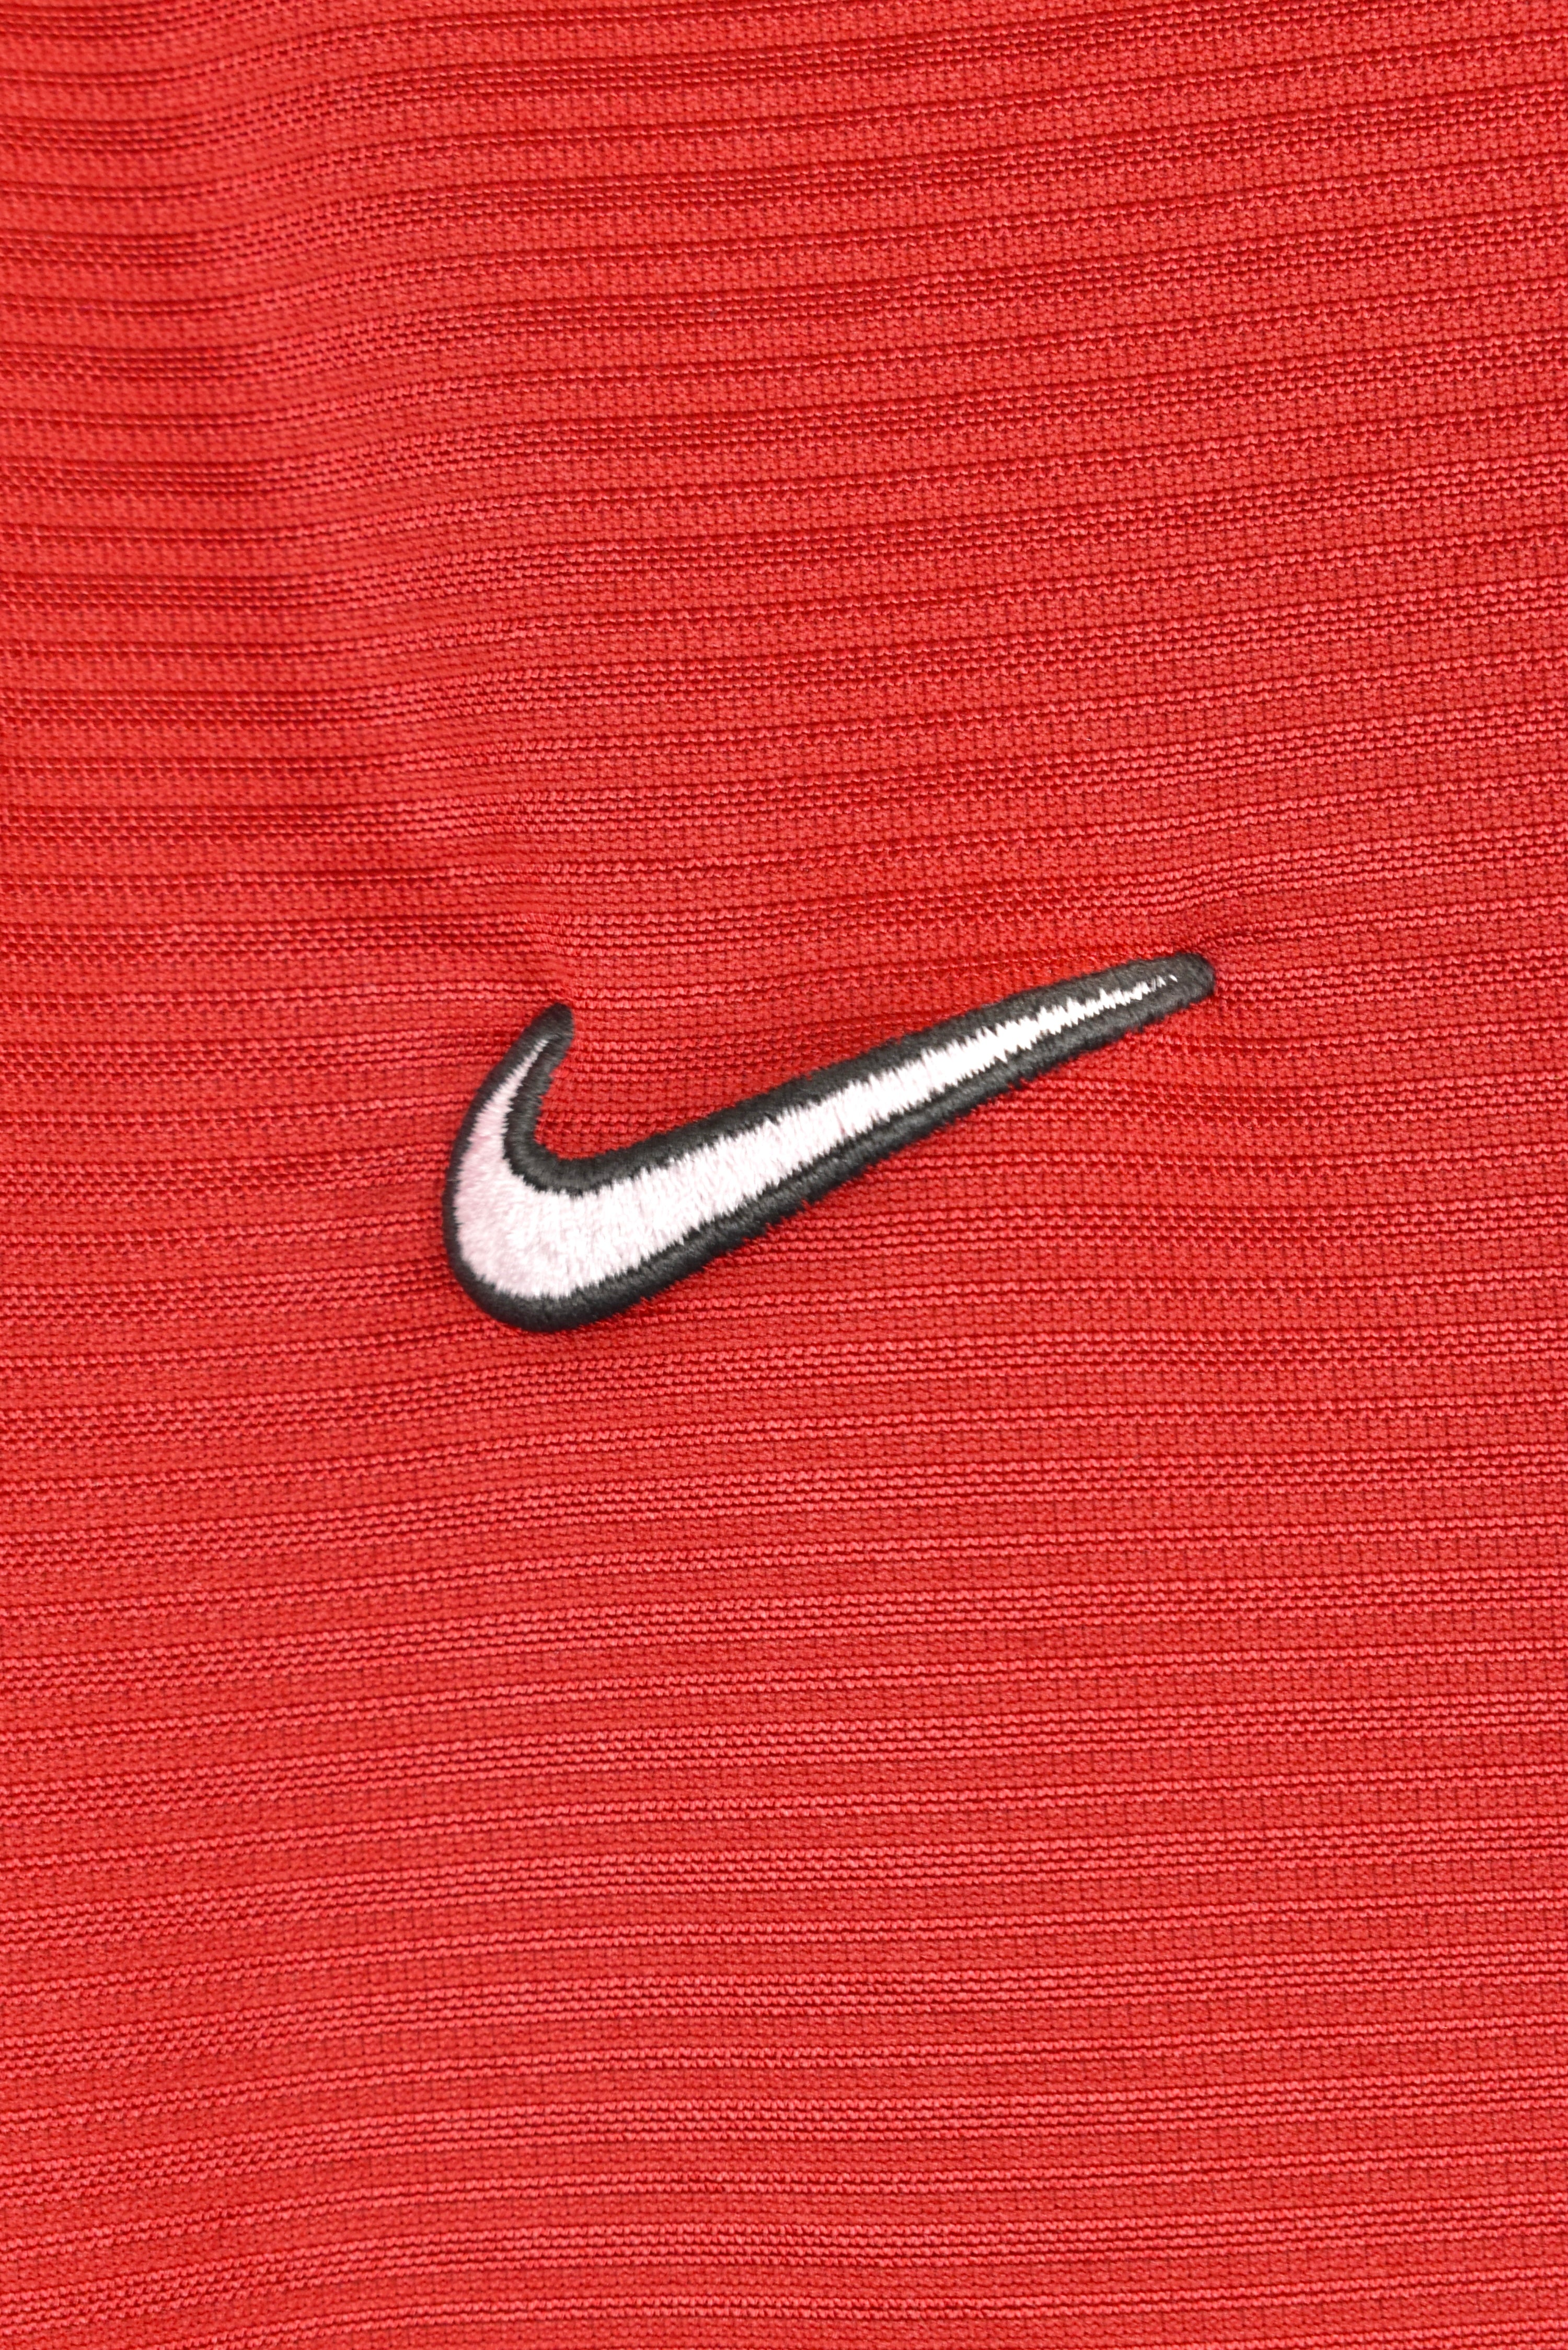 Vintage Nike shirt, red embroidered tee - AU L NIKE